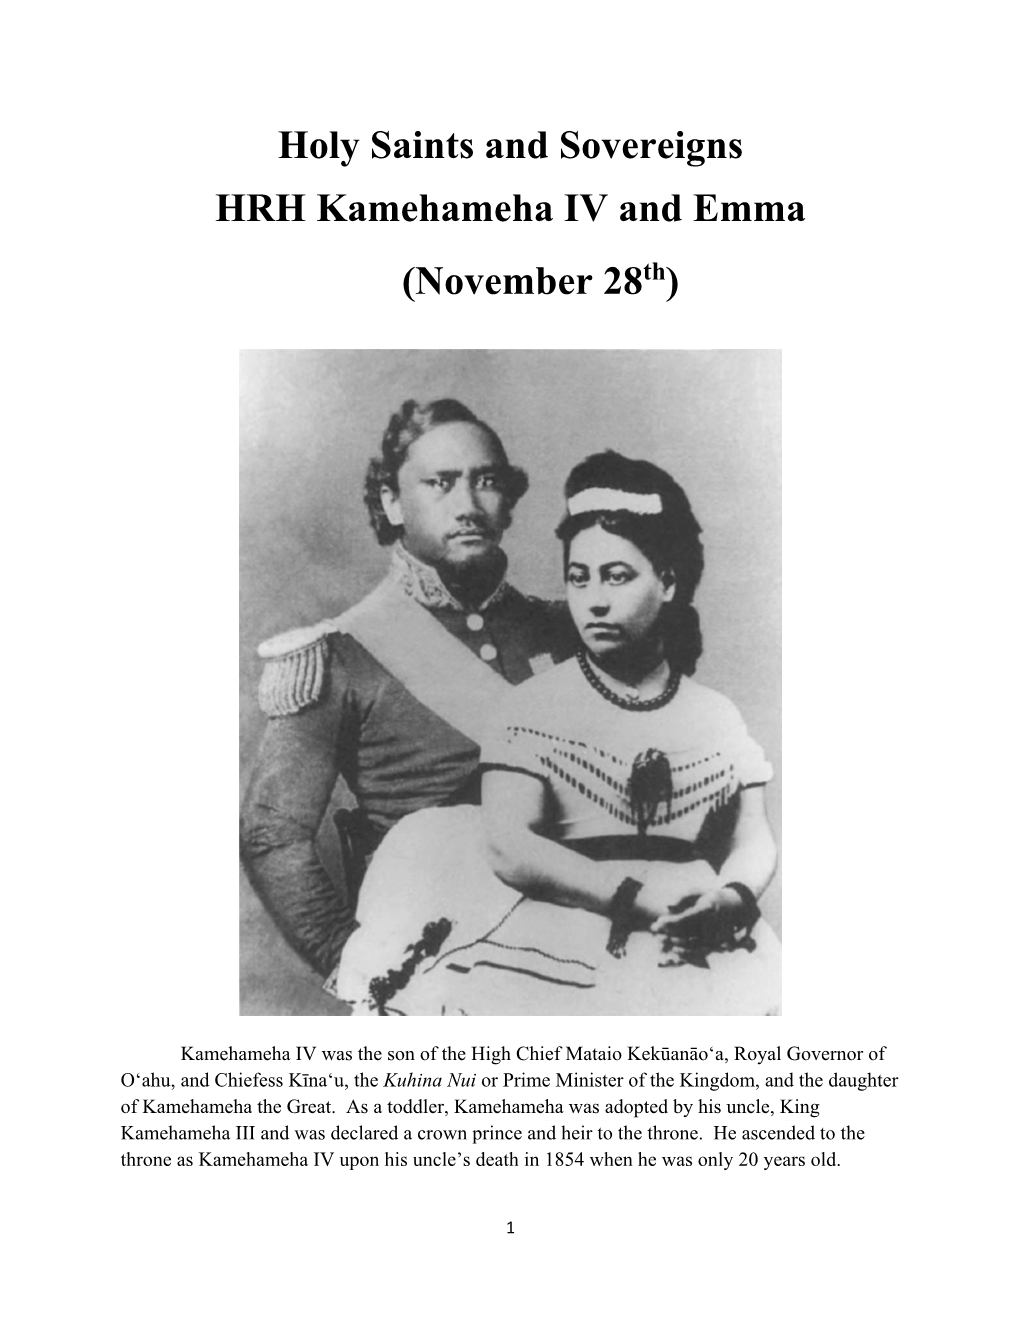 HRH Kamehameha IV and Queen Emma